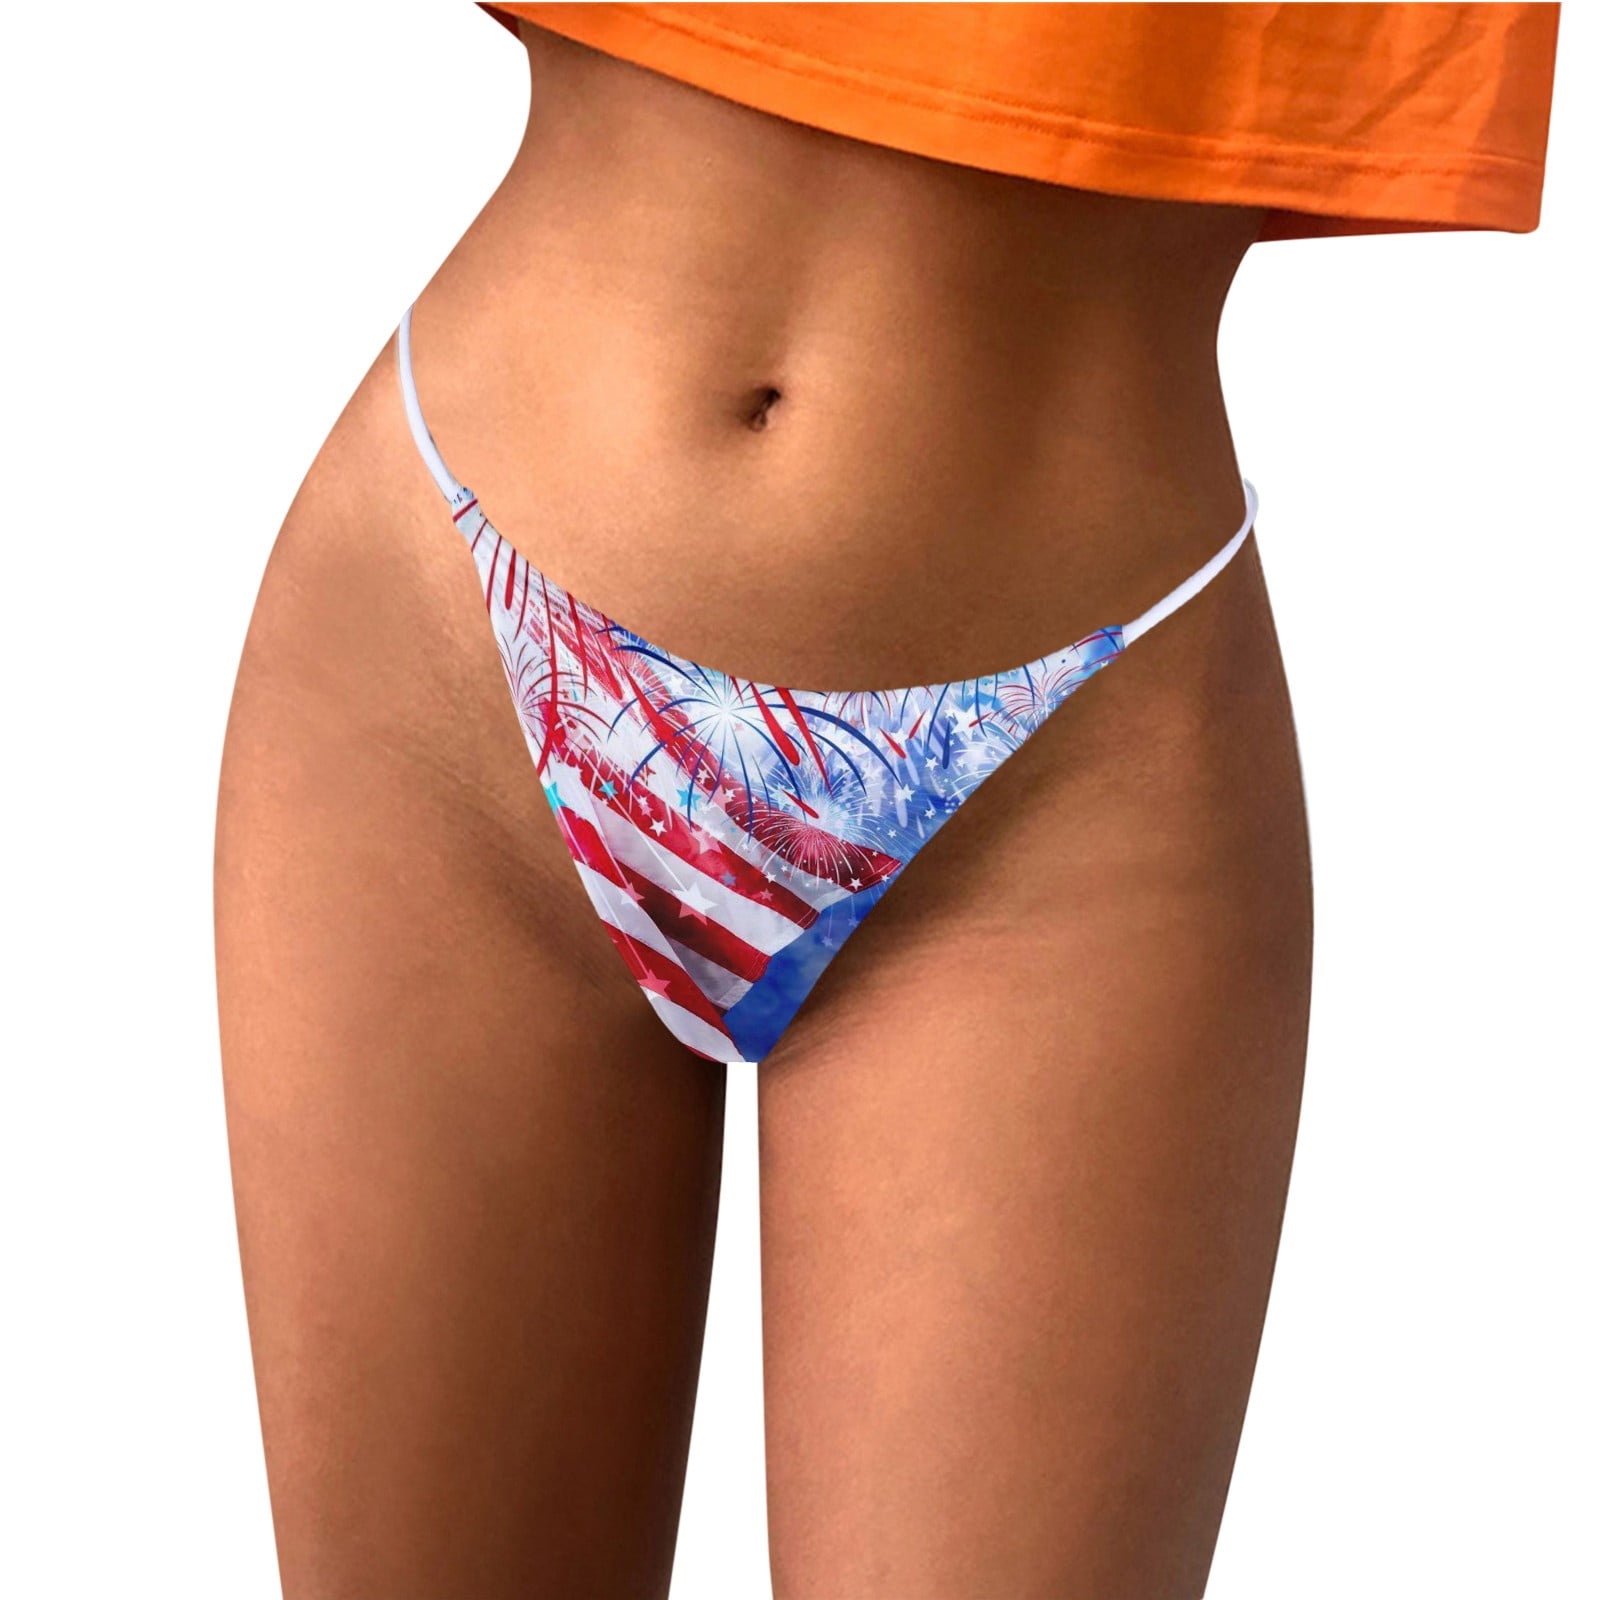 PMUYBHF G String Printed Panties Women's T Back underpants Comfort